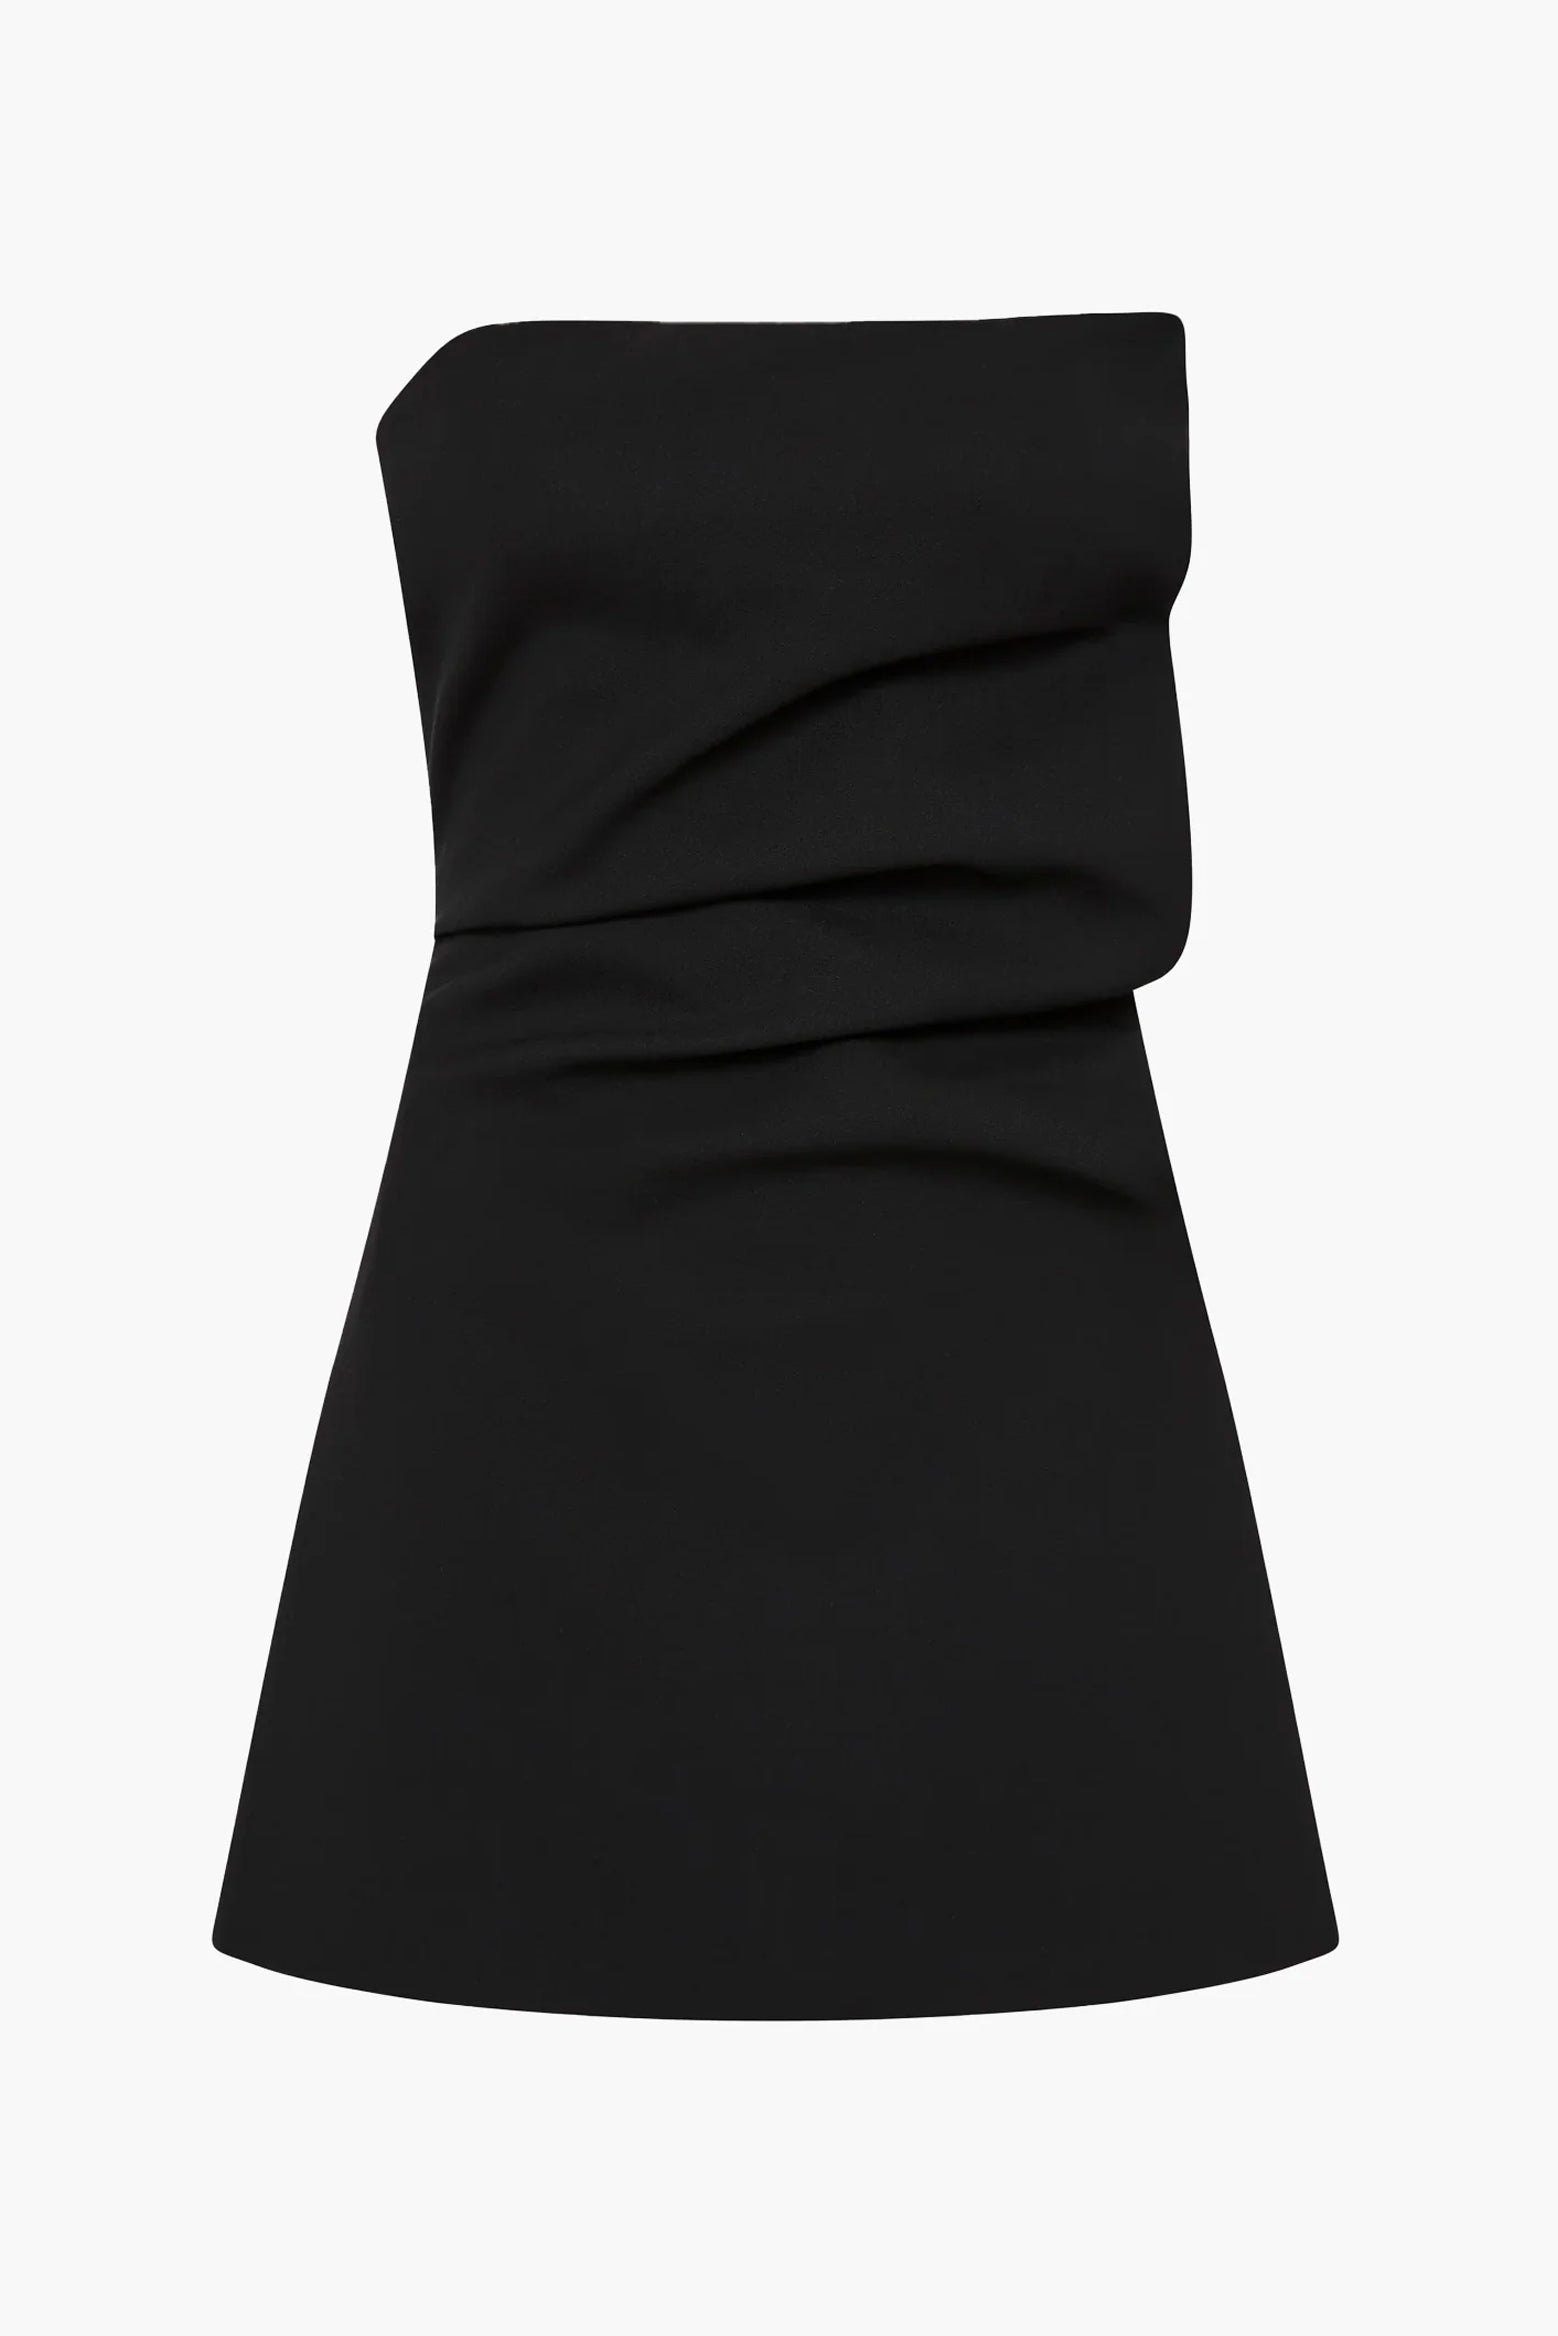 SIR Leonardo Mini Dress in Black available at The New Trend Australia.